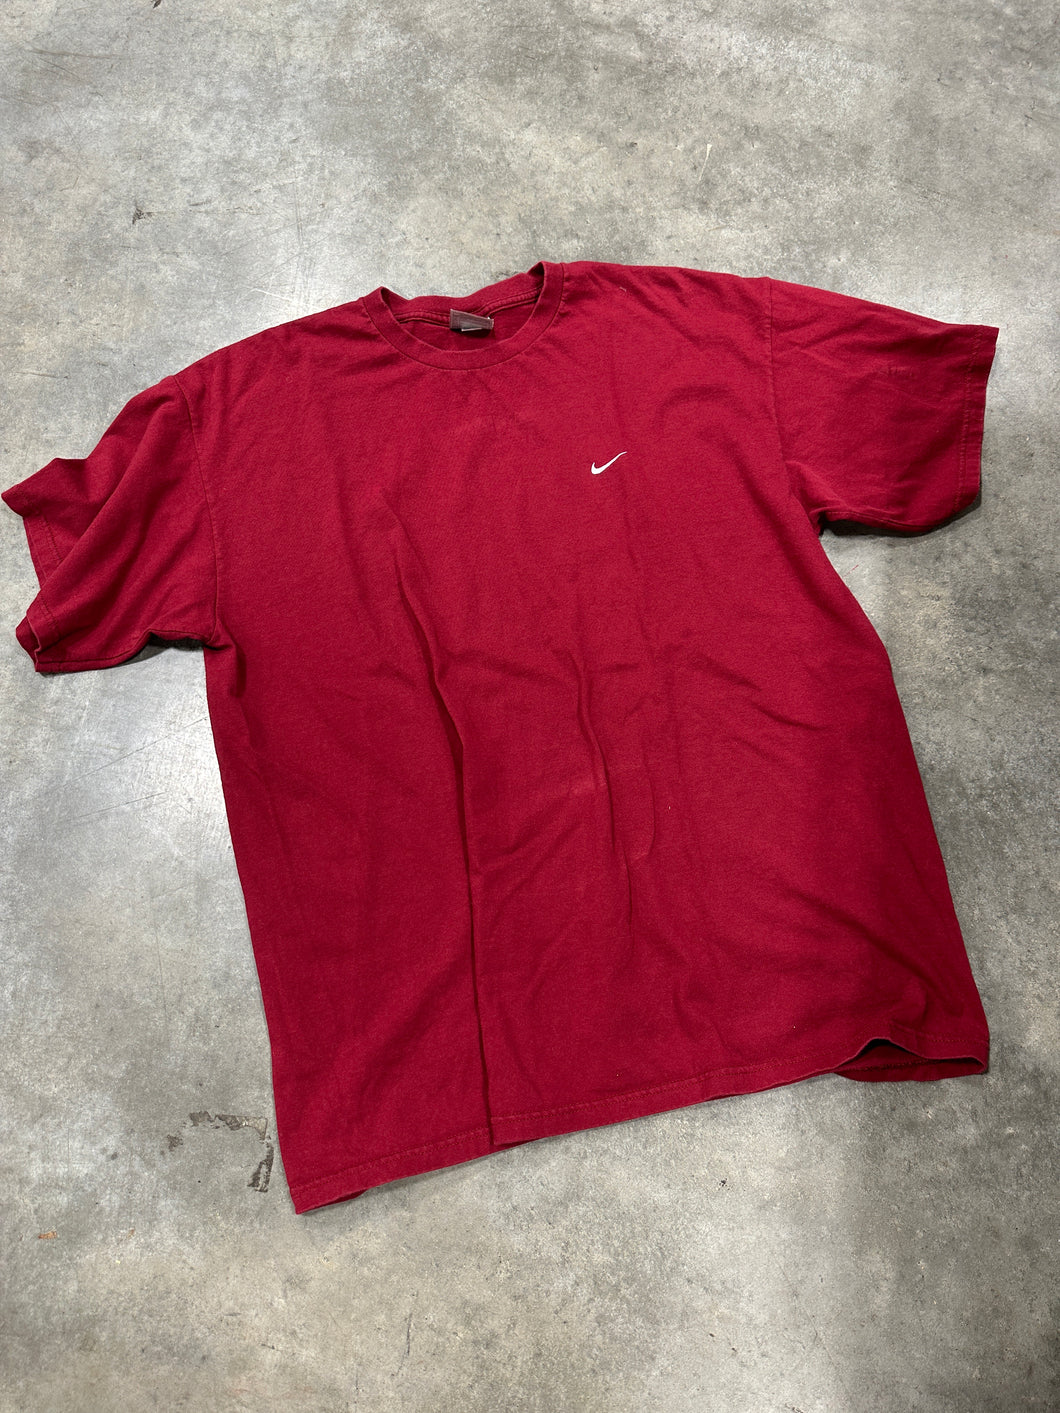 Vintage Nike Red T-Shirt Sz XL